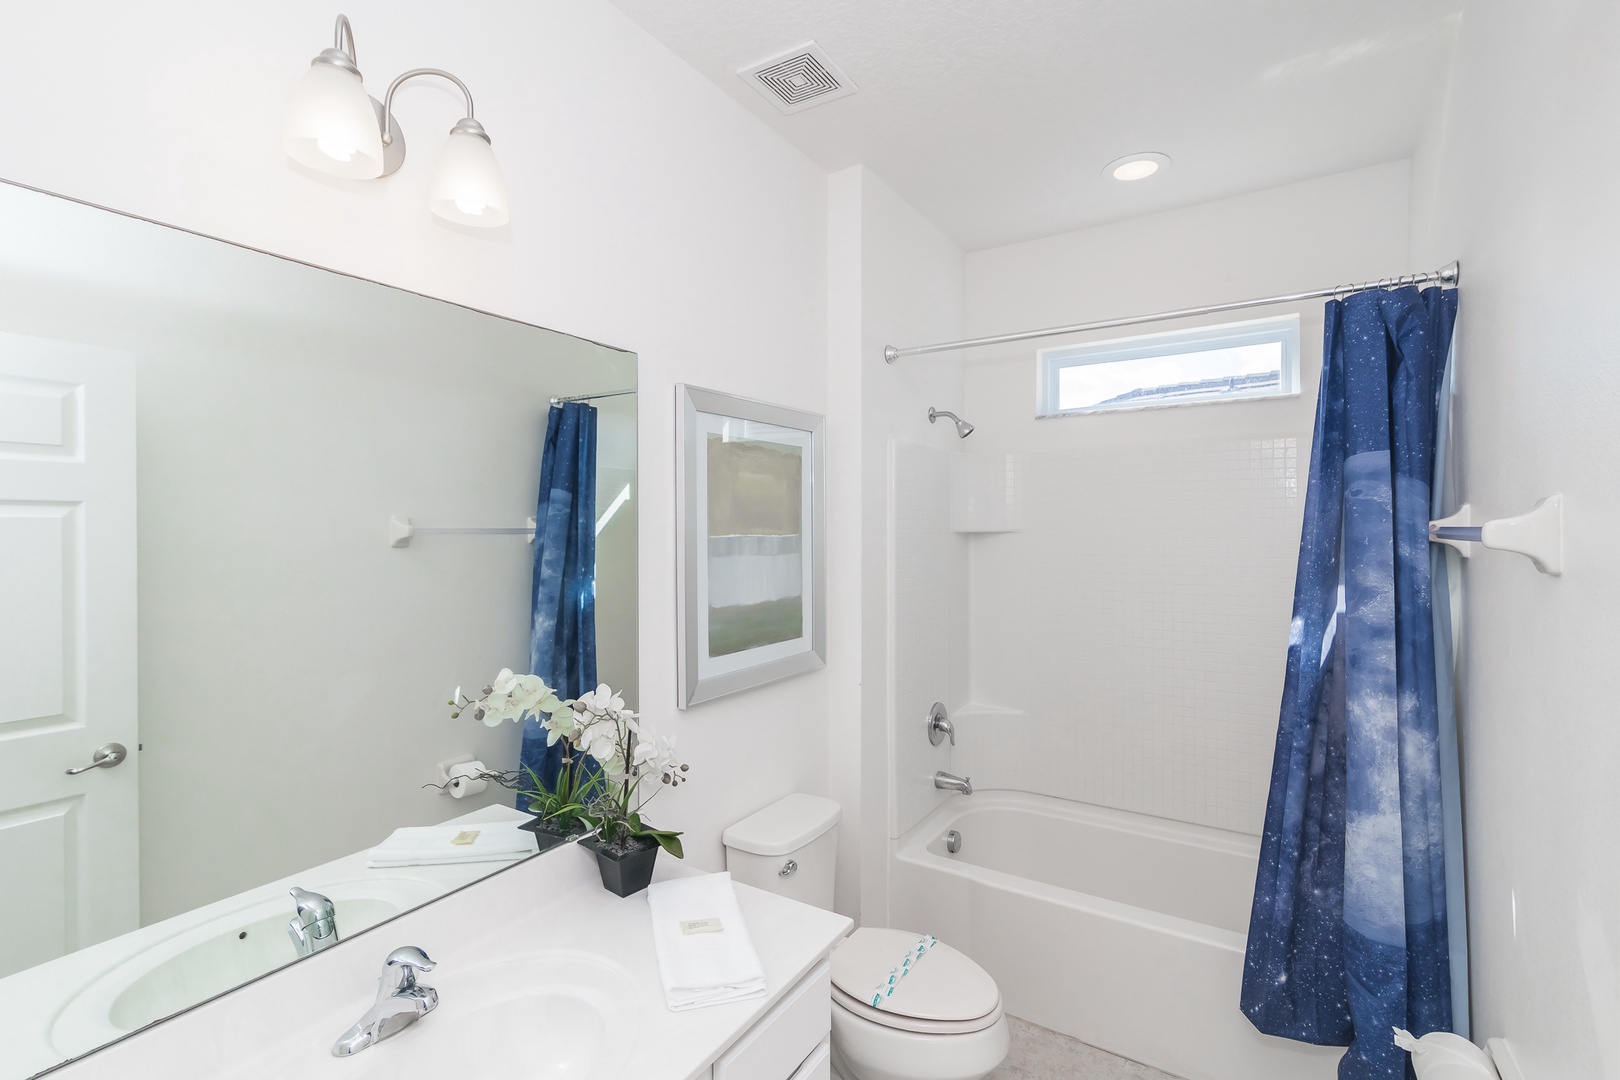 Shared bathroom with shower/tub combo (Bathroom 3, 2nd floor)